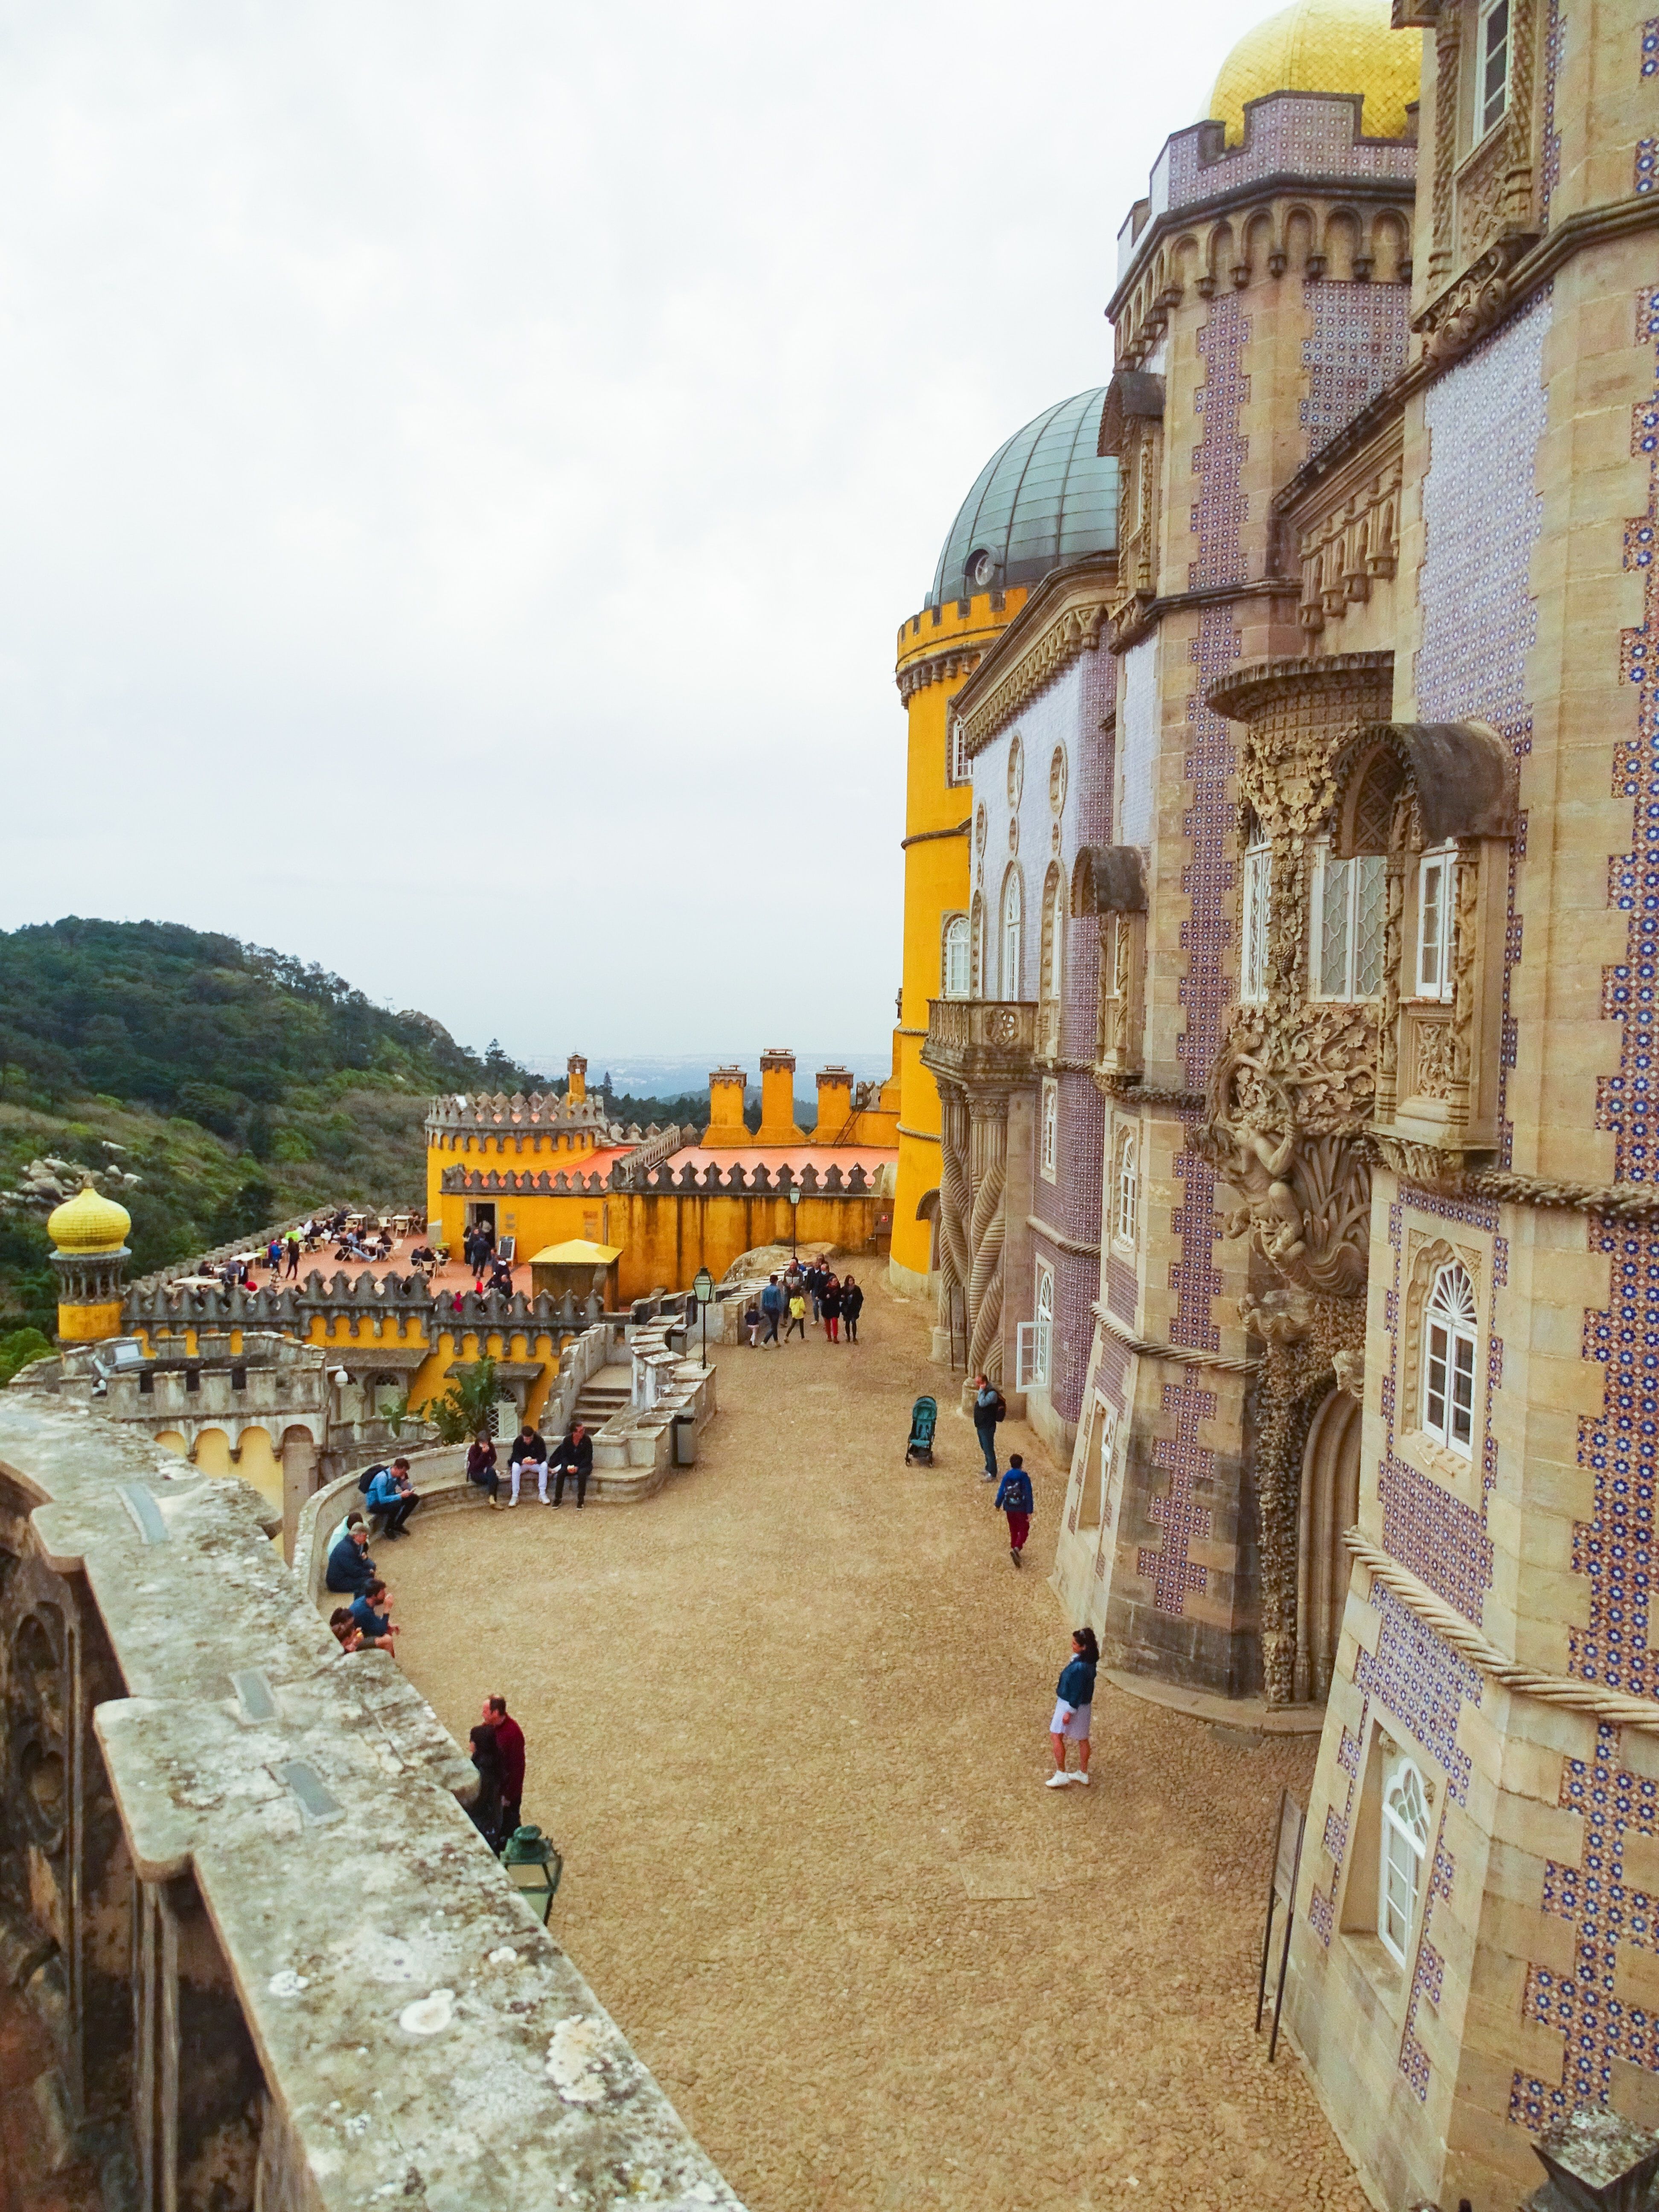 Tourists walk around colorful palace 